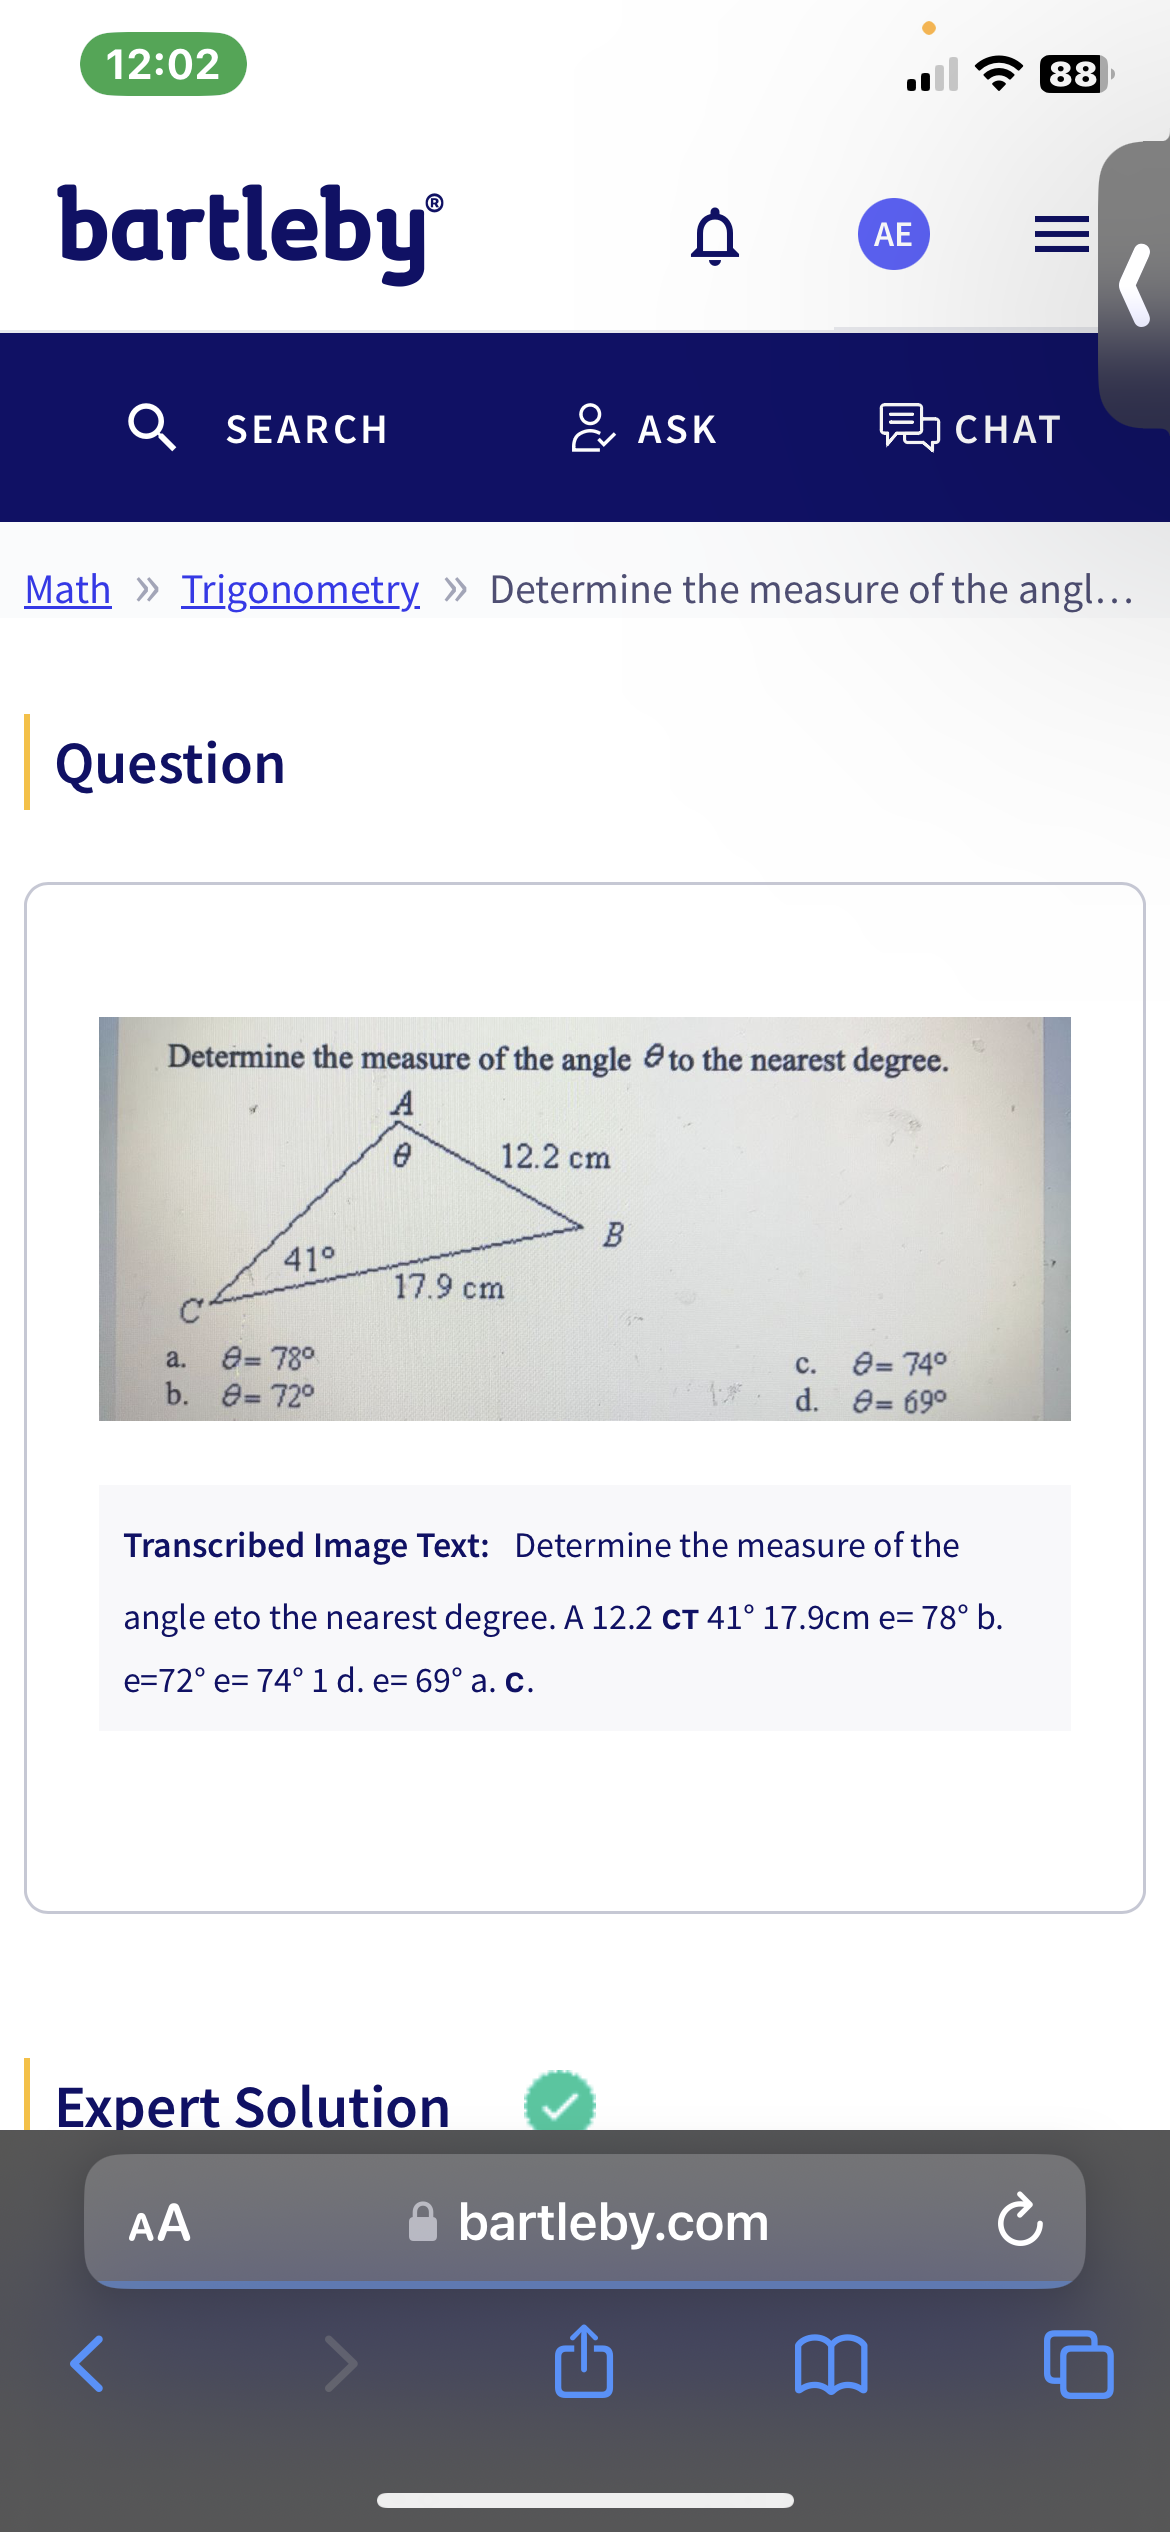 12:02
bartleby®
SEARCH
Question
<
41°
a. 8=78°
b. 8=72°
Math » Trigonometry » Determine the measure of the angl...
& ASK
Determine the measure of the angle to the nearest degree.
A
0
17.9 cm
Expert Solution
AA
A
12.2 cm
B
AE
愚CHAT
bartleby.com
r↑
Transcribed Image Text: Determine the measure of the
angle eto the nearest degree. A 12.2 CT 41° 17.9cm e= 78° b.
e=72° e= 74° 1 d. e= 69° a. c.
C.
8=74°
d. 8=69⁰
88
Ć
(